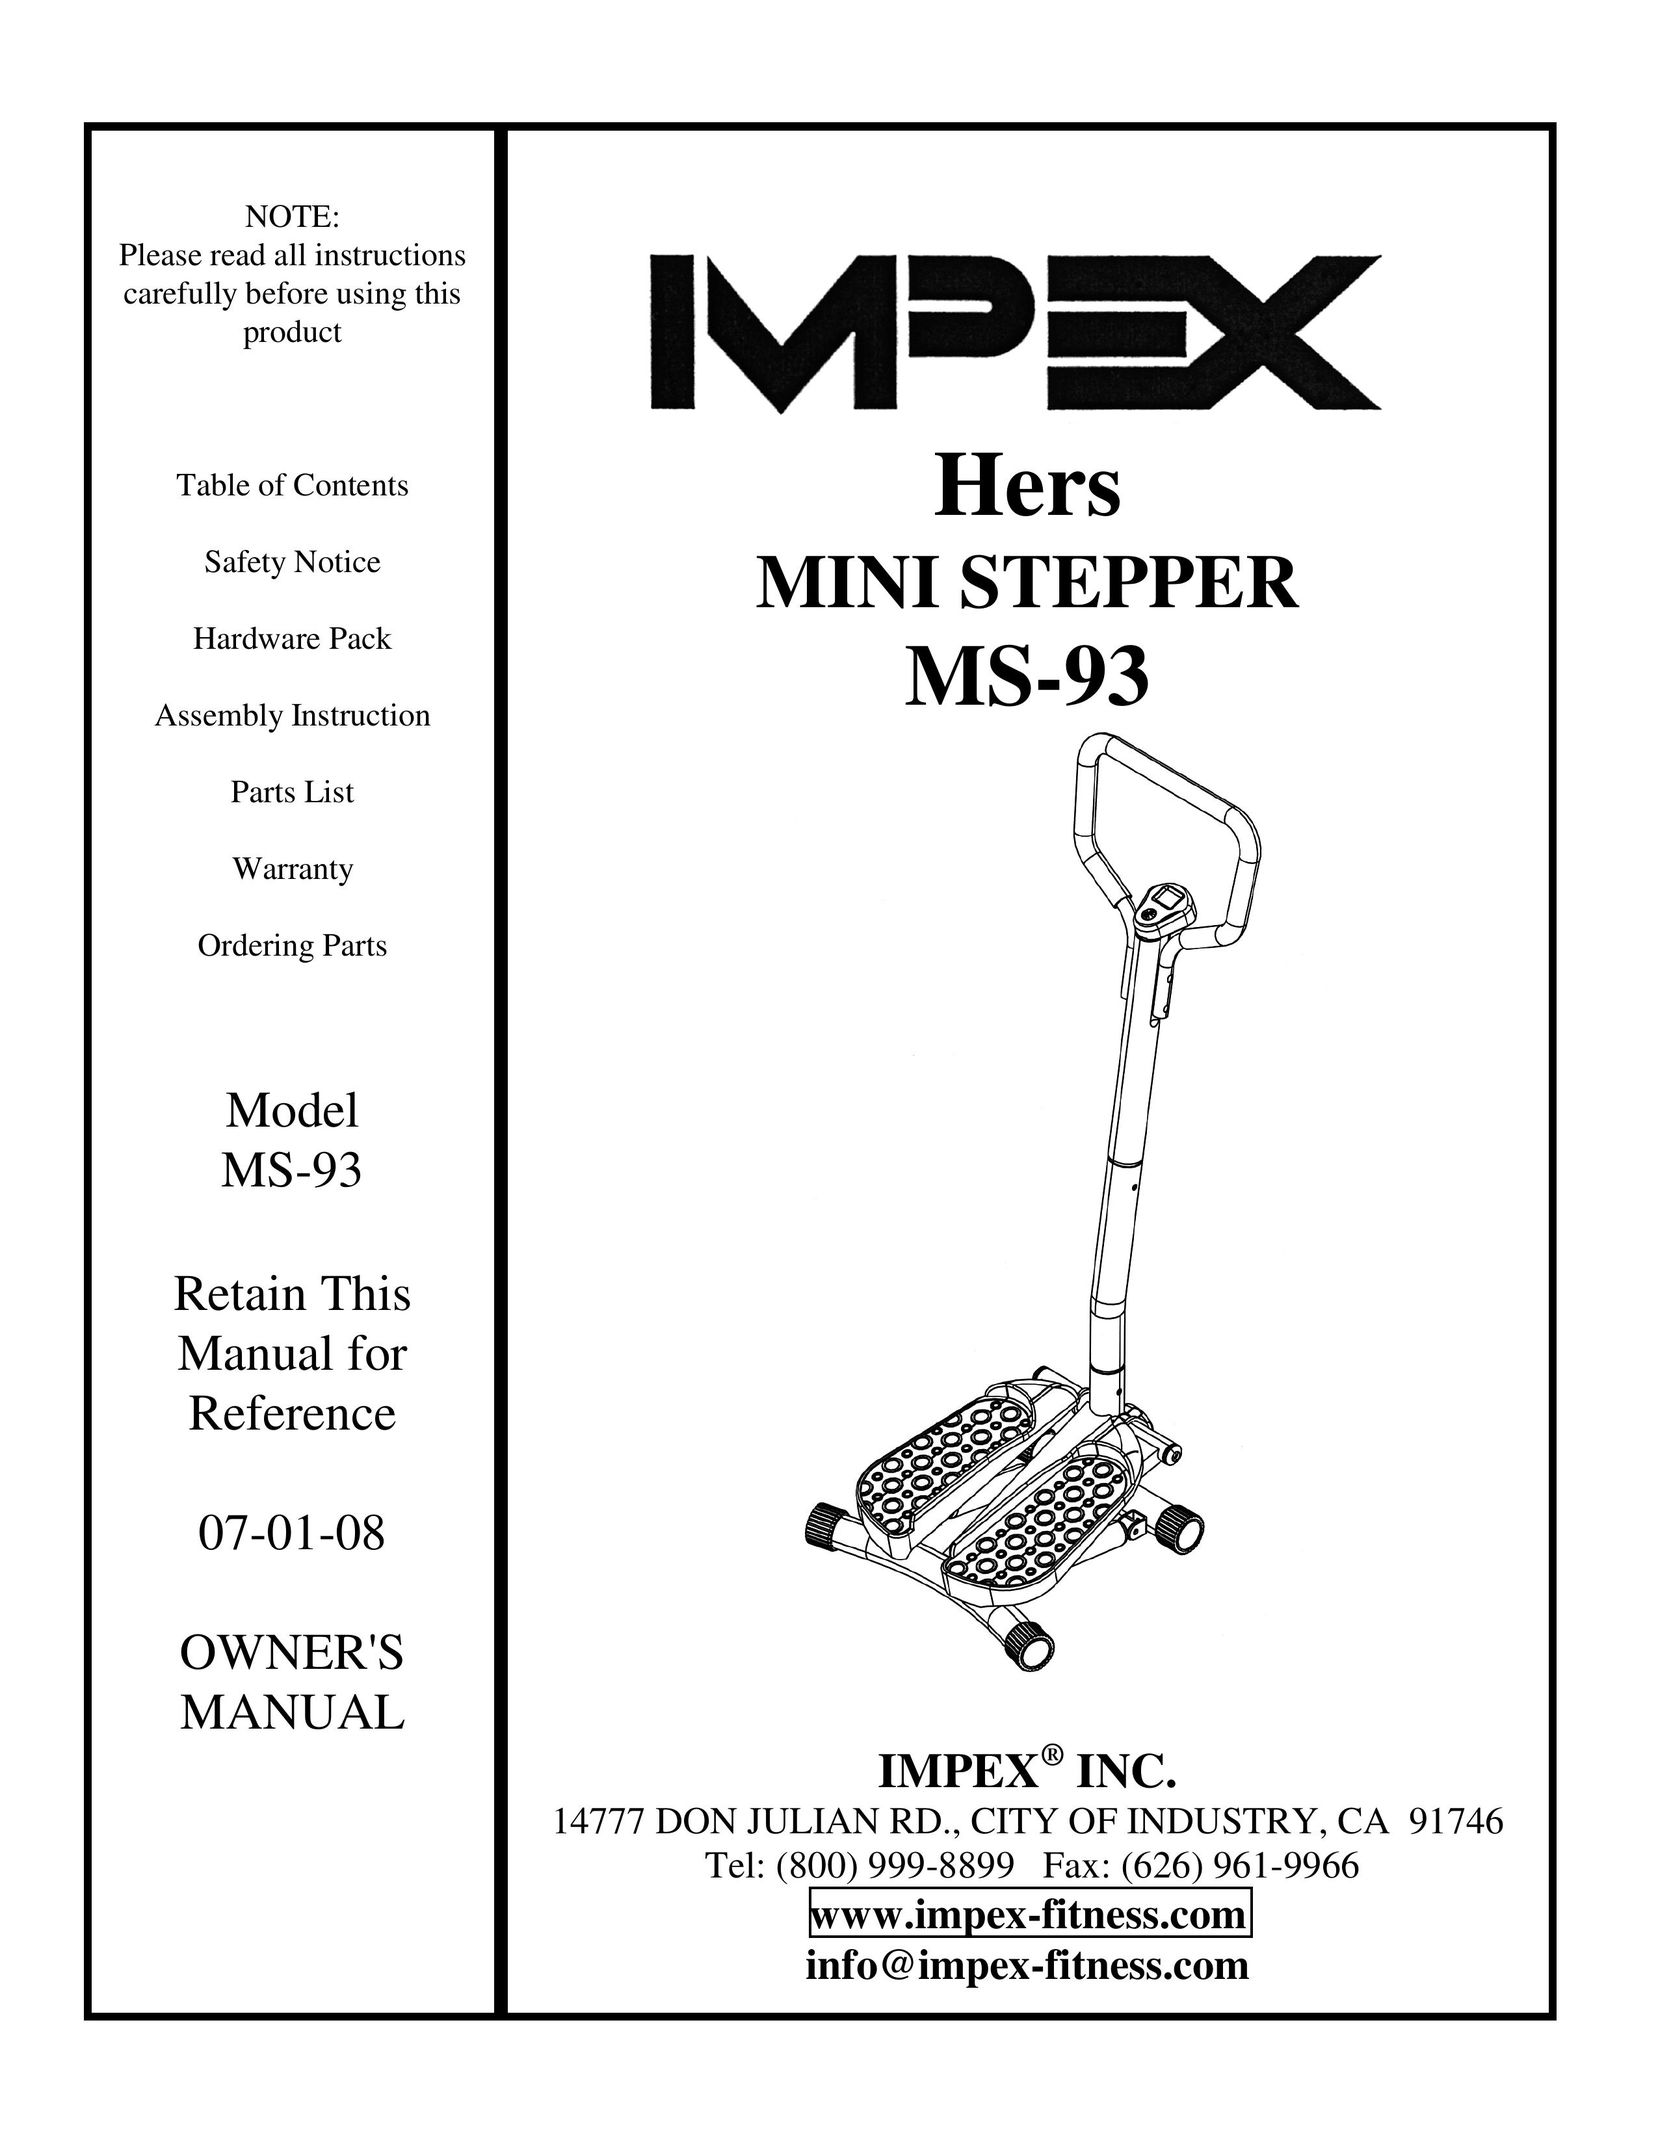 Impex MS-93 Tent User Manual